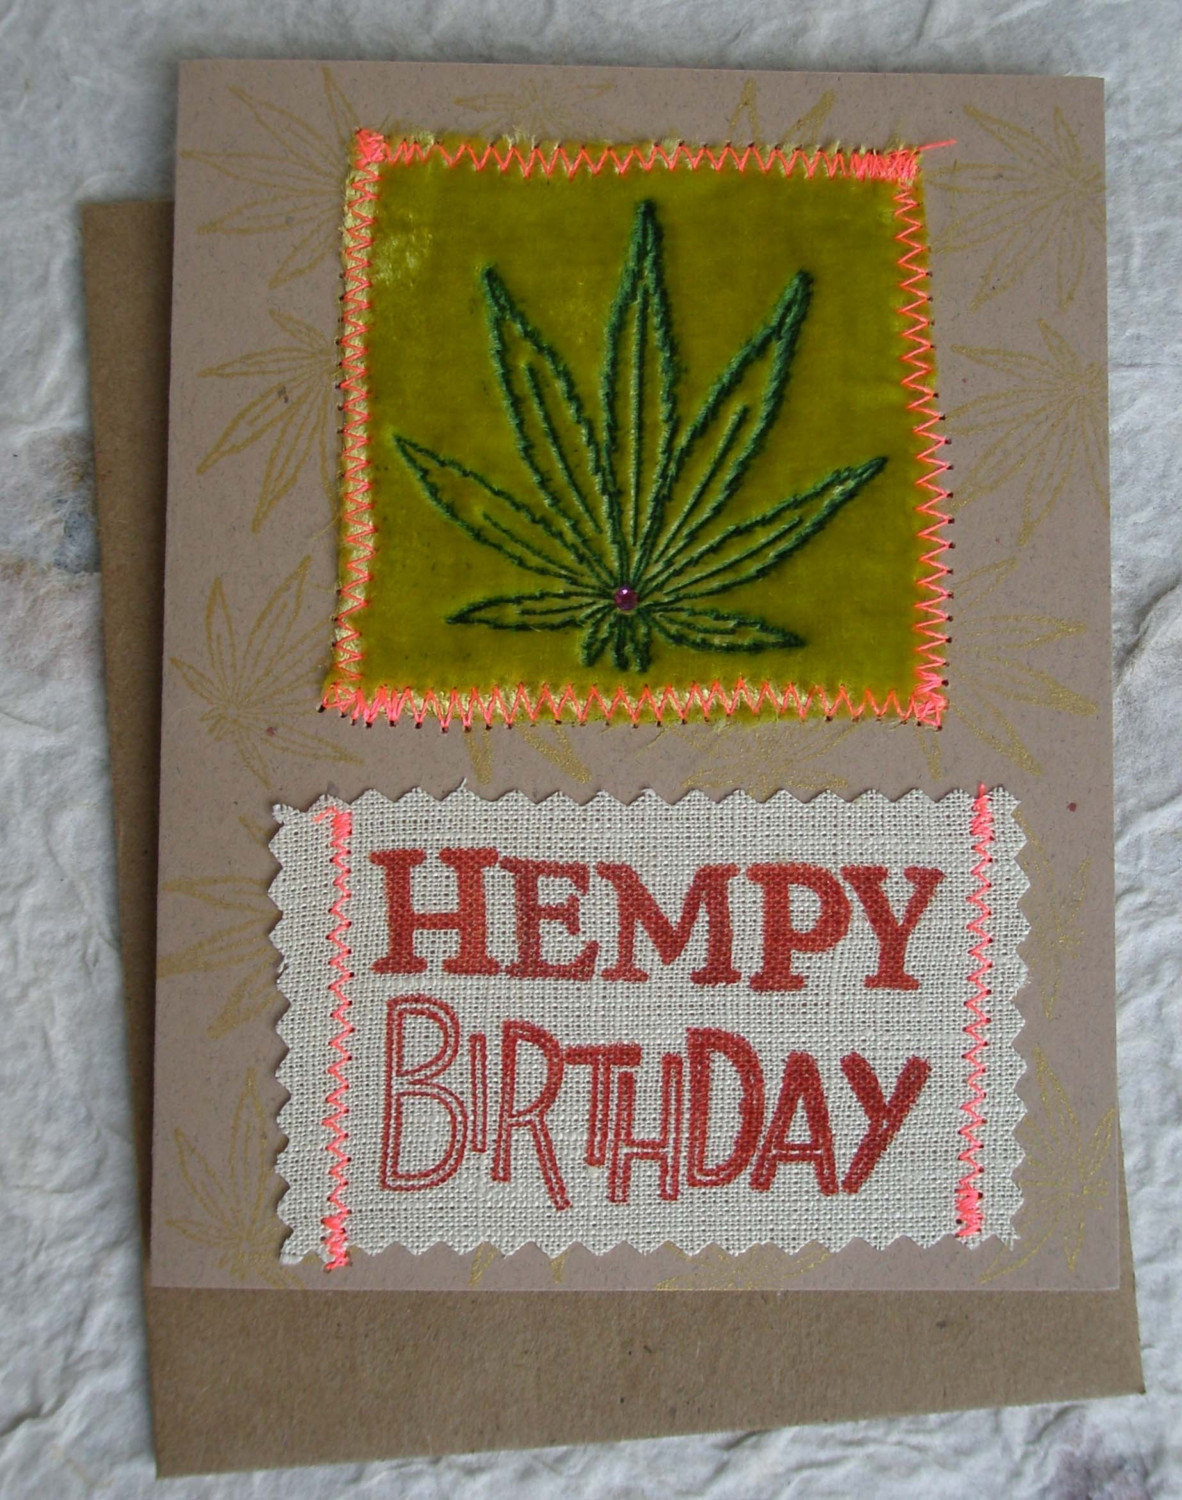 Best ideas about Weed Birthday Card
. Save or Pin HEMPY BIRTHDAY MARIJUANA LEAF WITH SWAROVSKI CRYSTAL CARD Now.